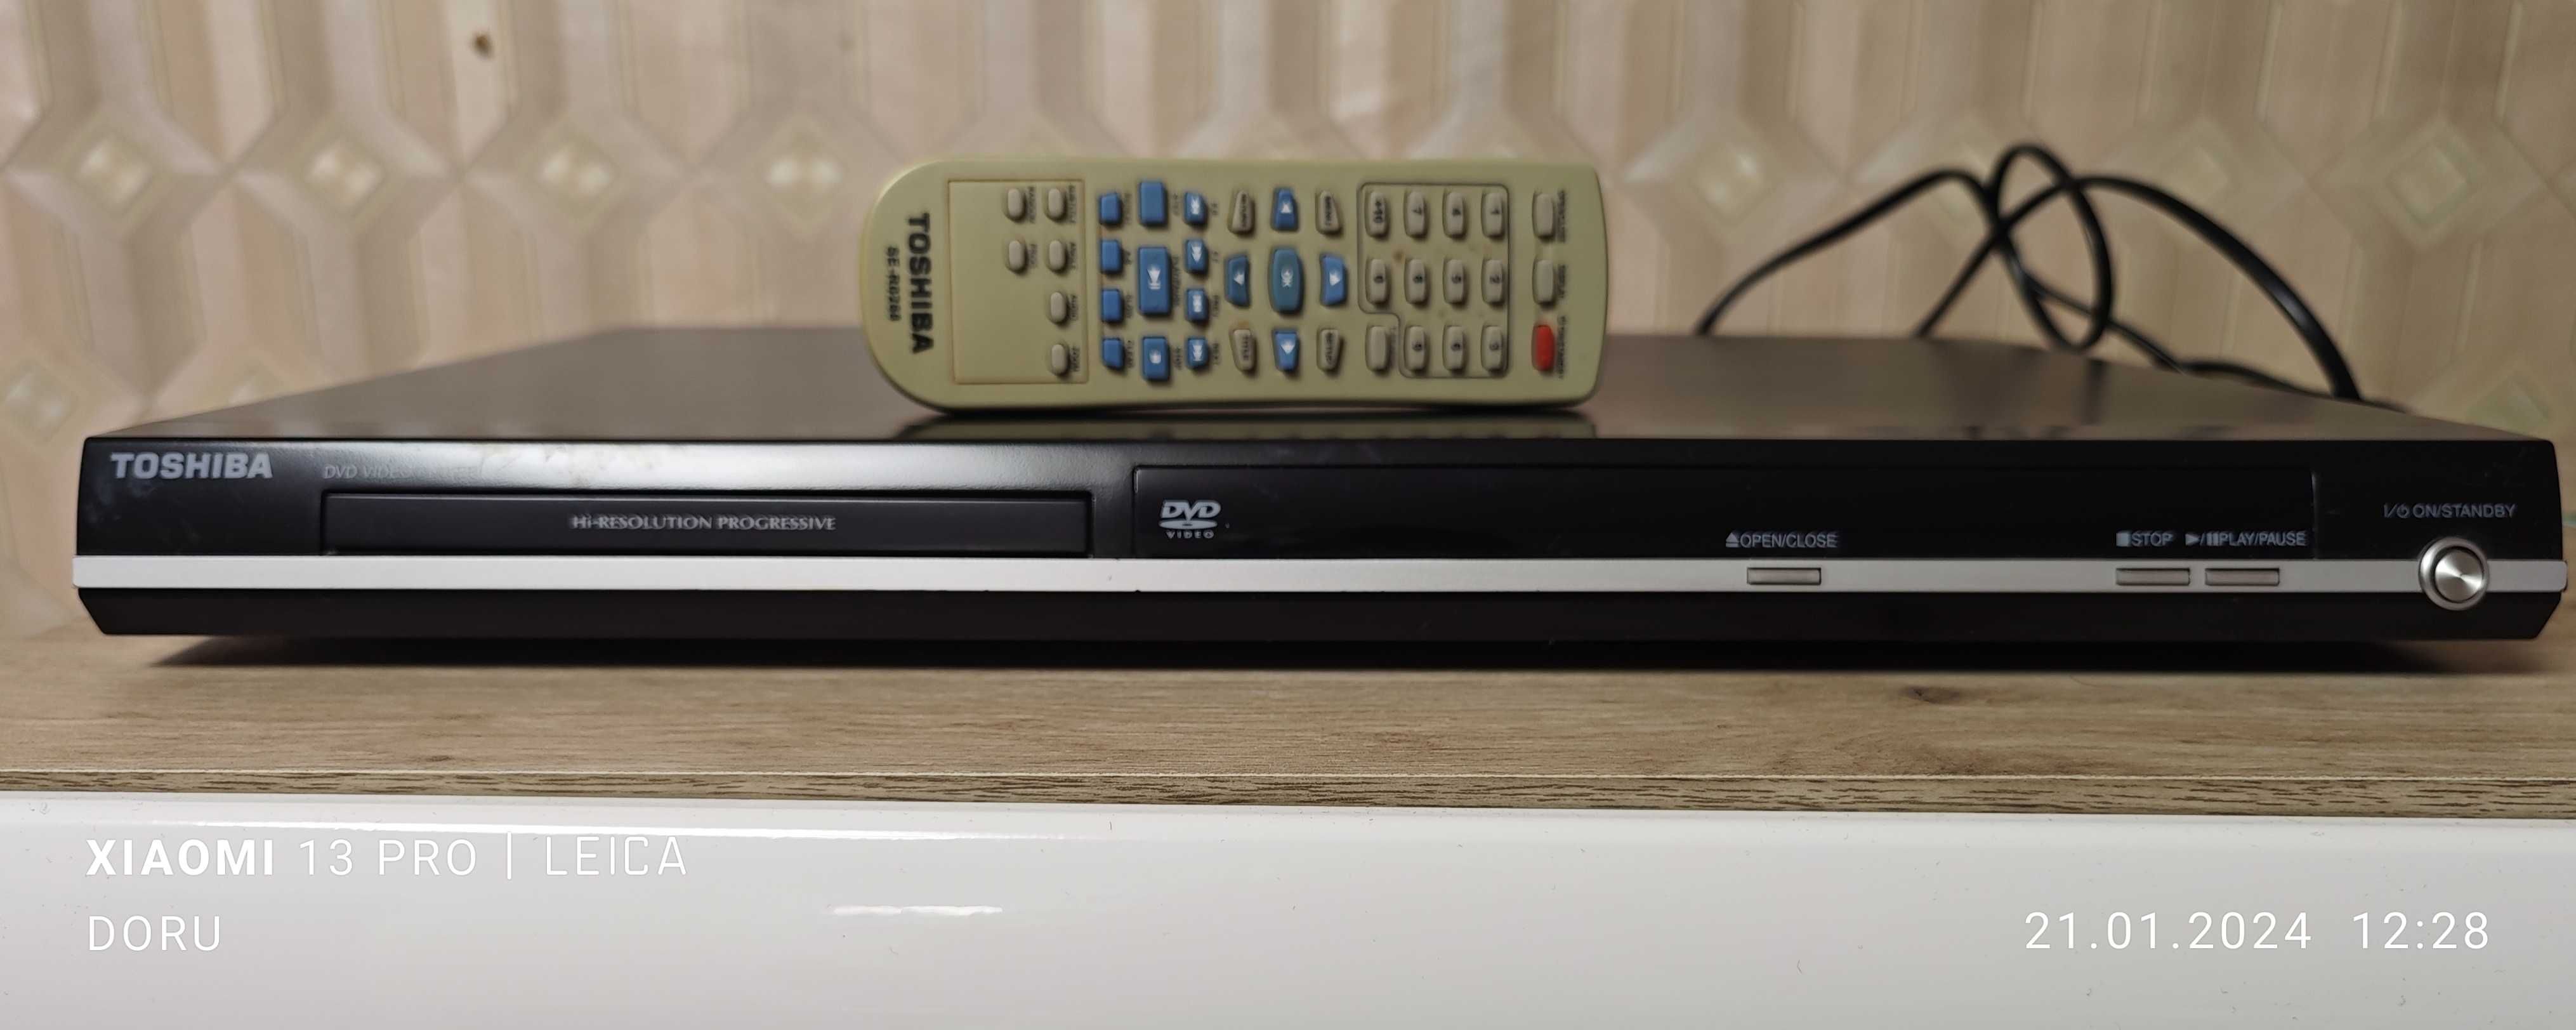 Dvd recorder Samsung + Dvd Player Toshiba